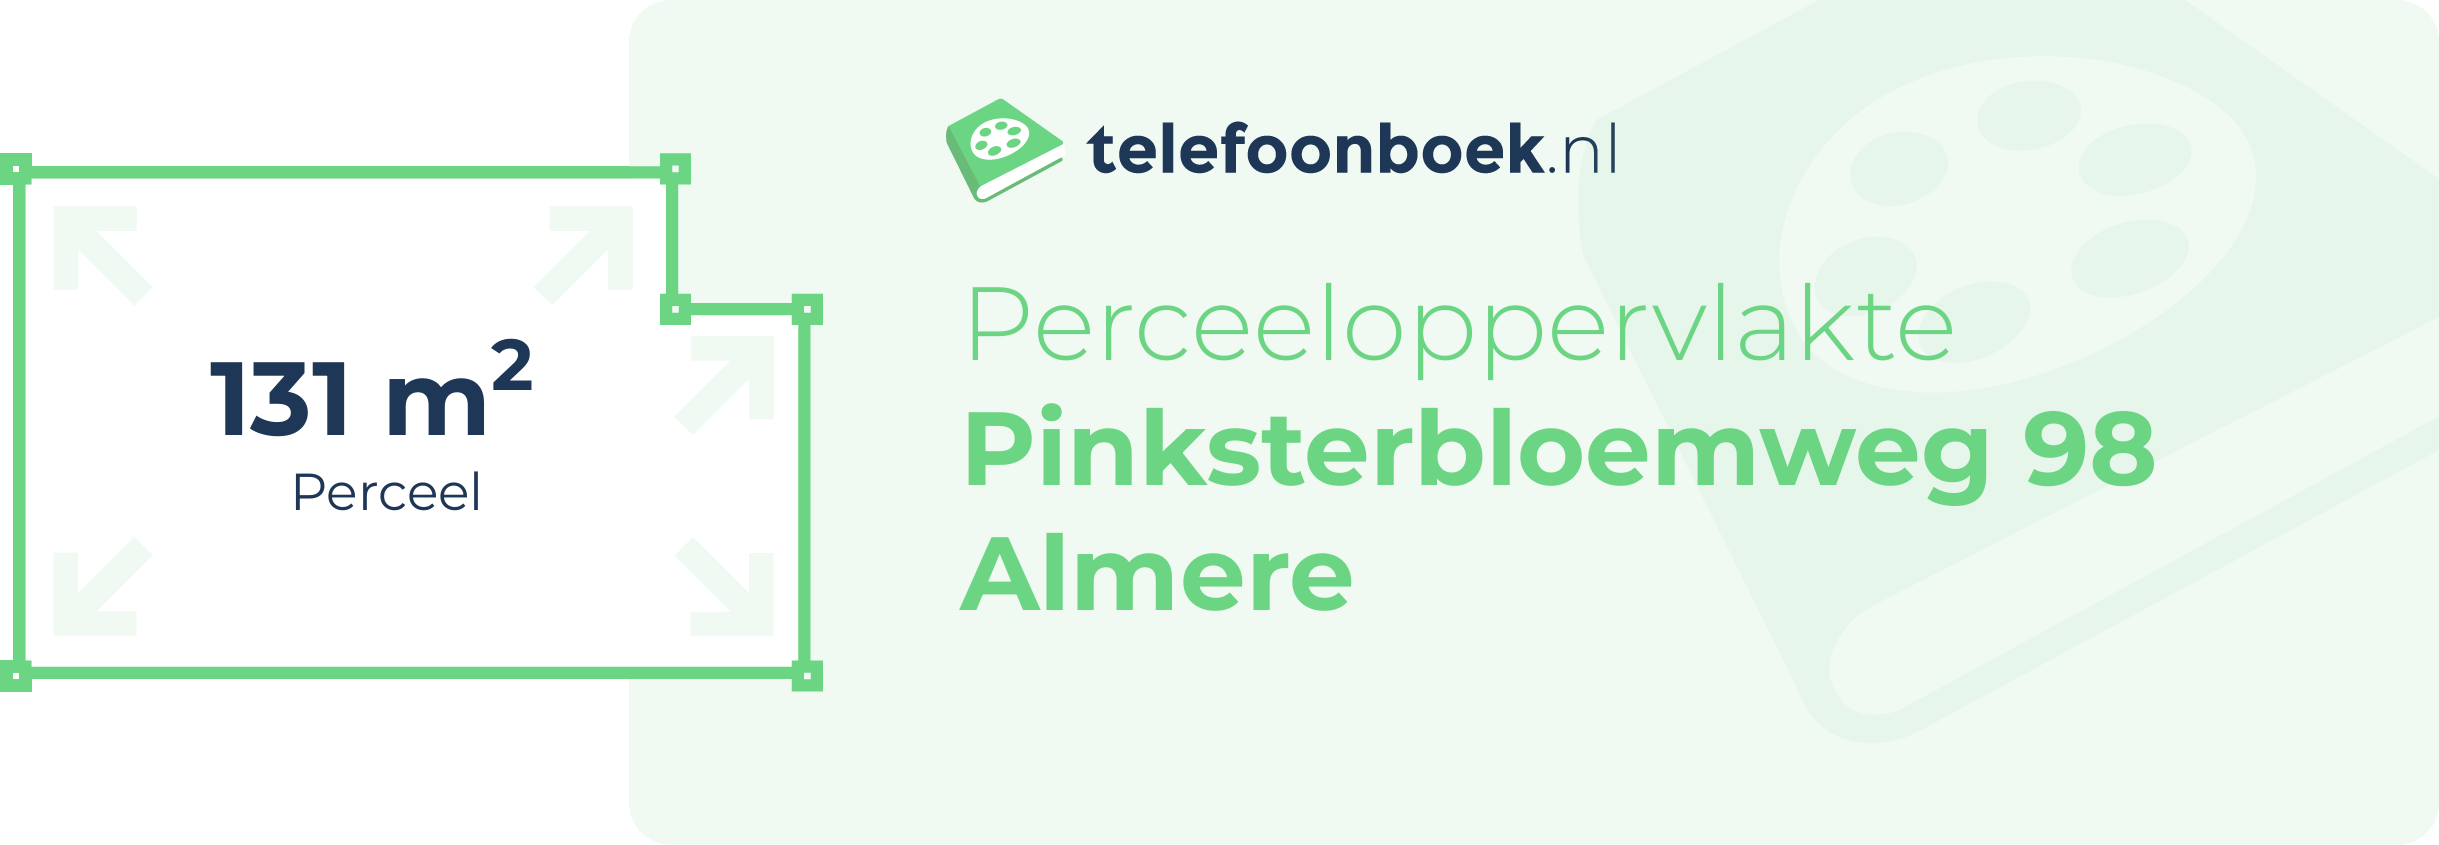 Perceeloppervlakte Pinksterbloemweg 98 Almere